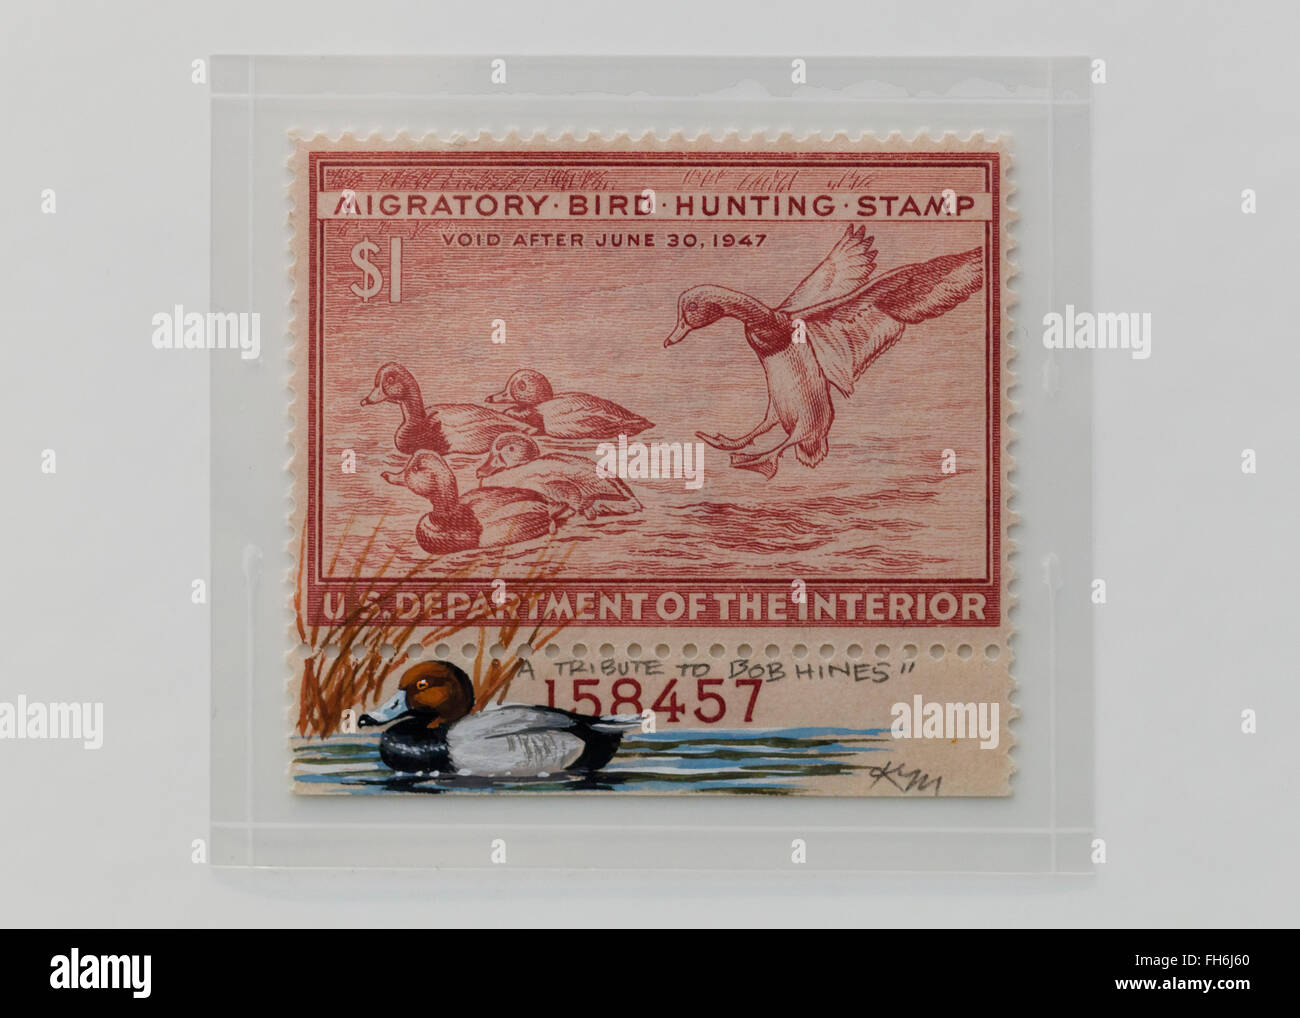 Vintage $1 Migratory Bird Hunting Stamp - USA Stock Photo